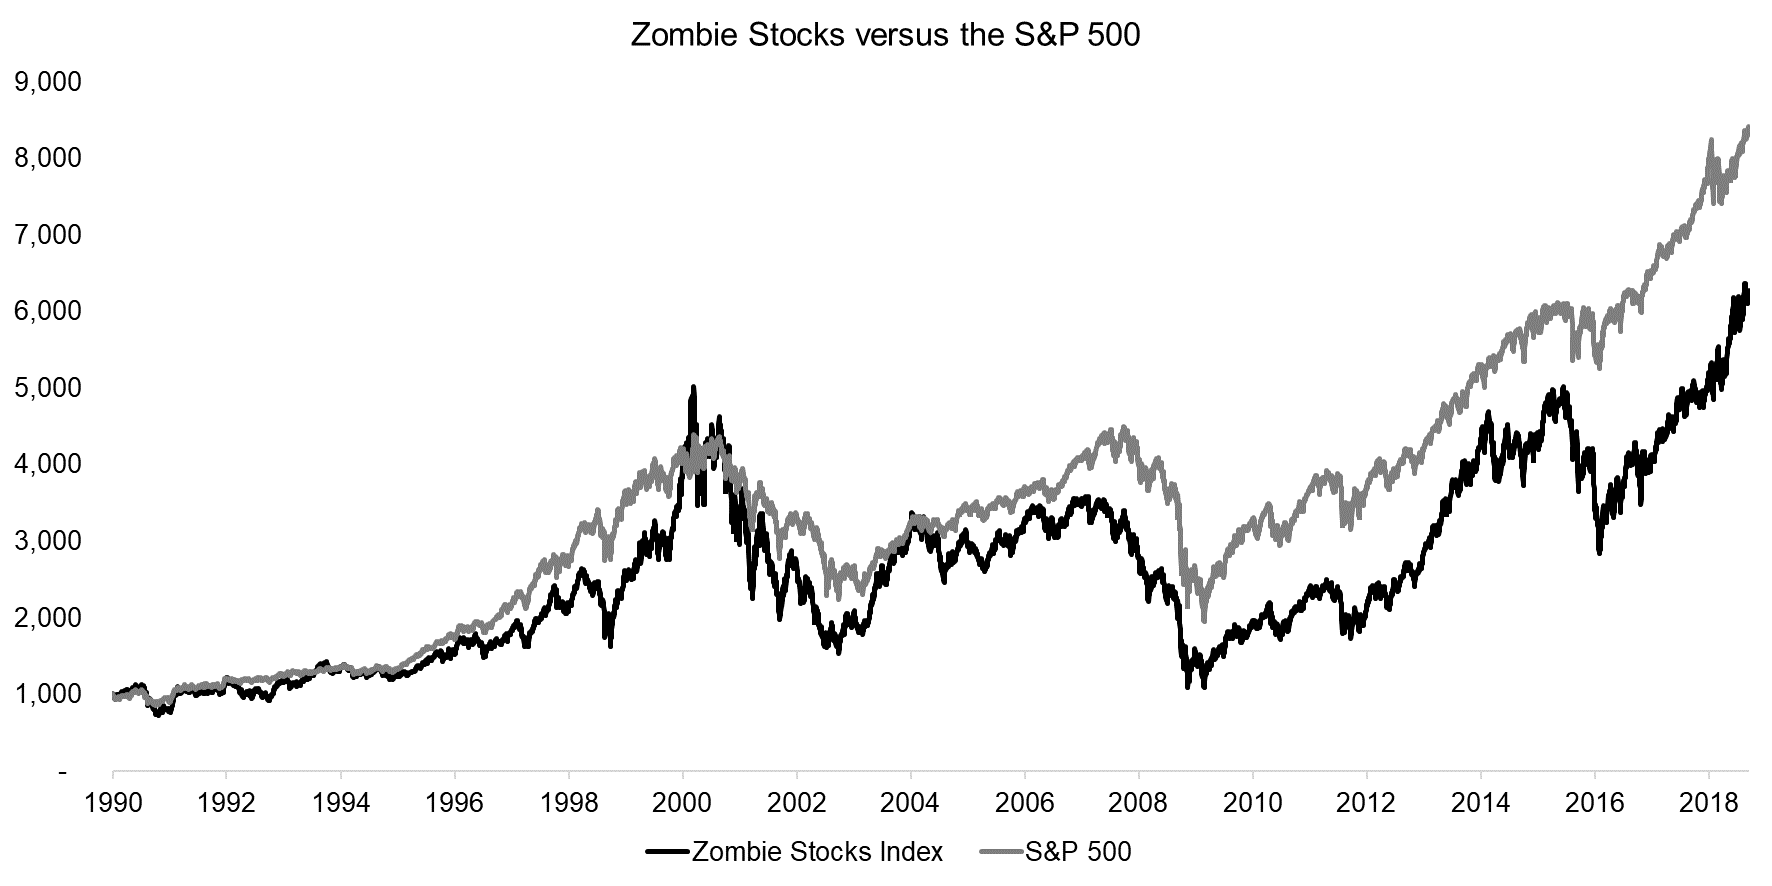 Zombie Stocks versus the S&P 500